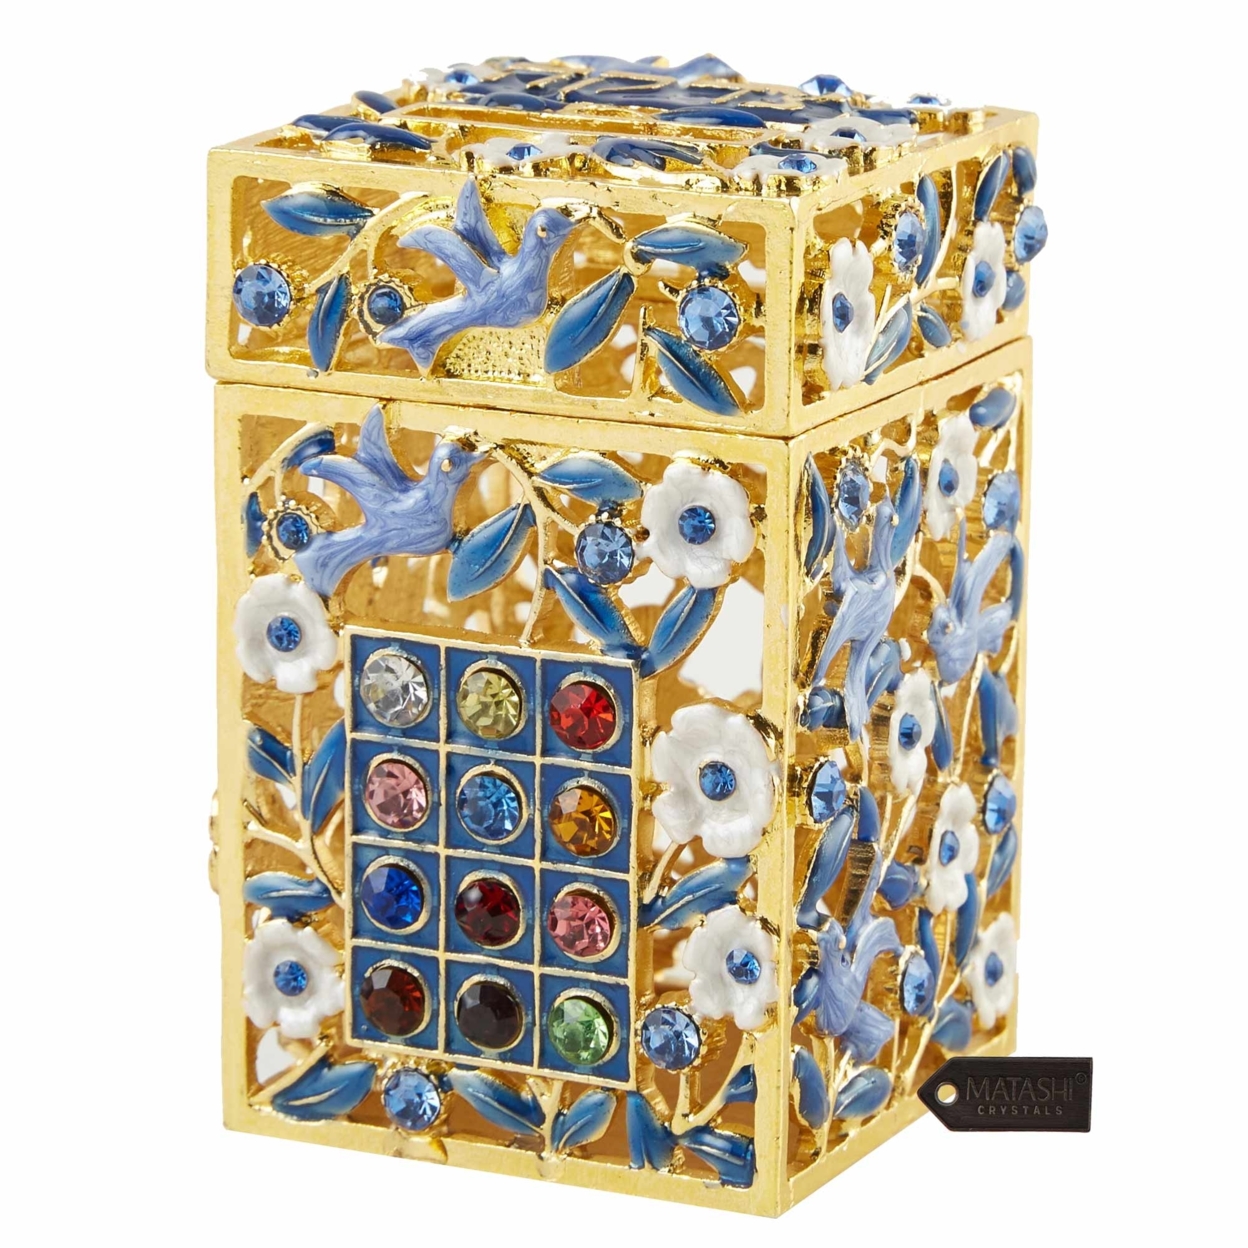 Matashi Hand-Painted Enamel Tzedakah Charity Box Keepsake Treasure Box W/ Crystals & Flower Dove Motif Design, Judaica Home Decor Piggy Bank